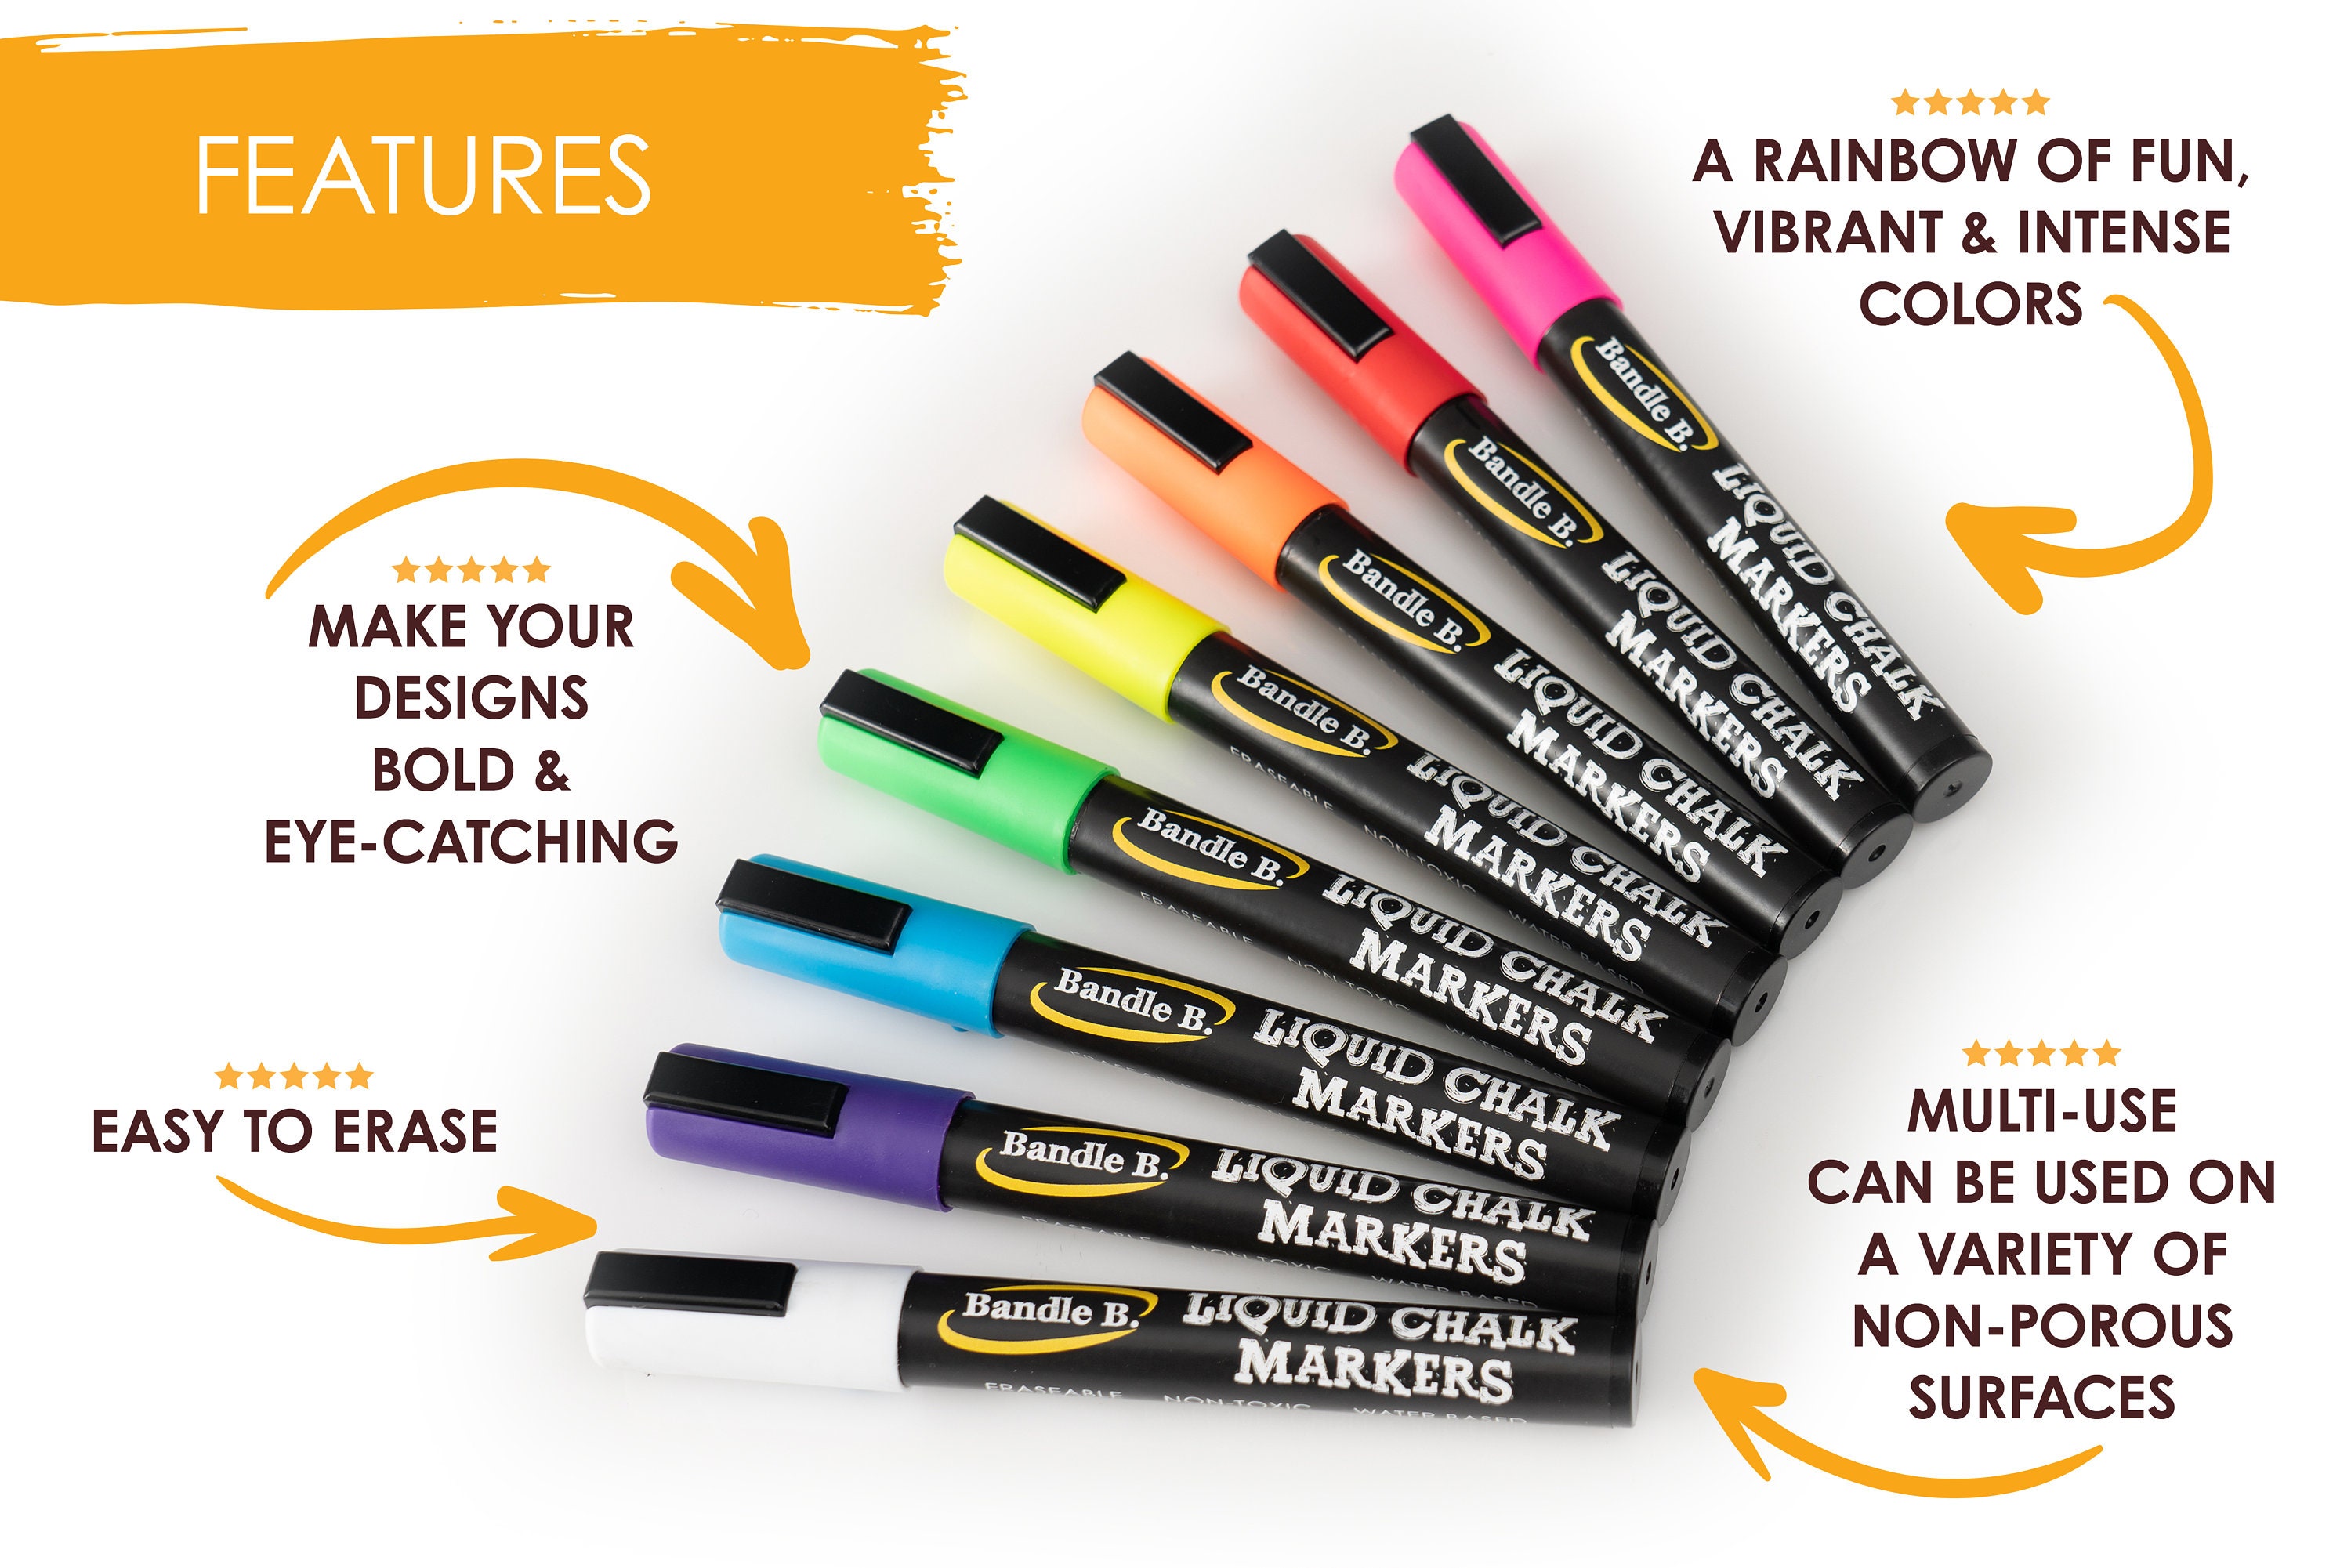 8ct Fine Point Chalk Markers - Macaron Pastel Colors